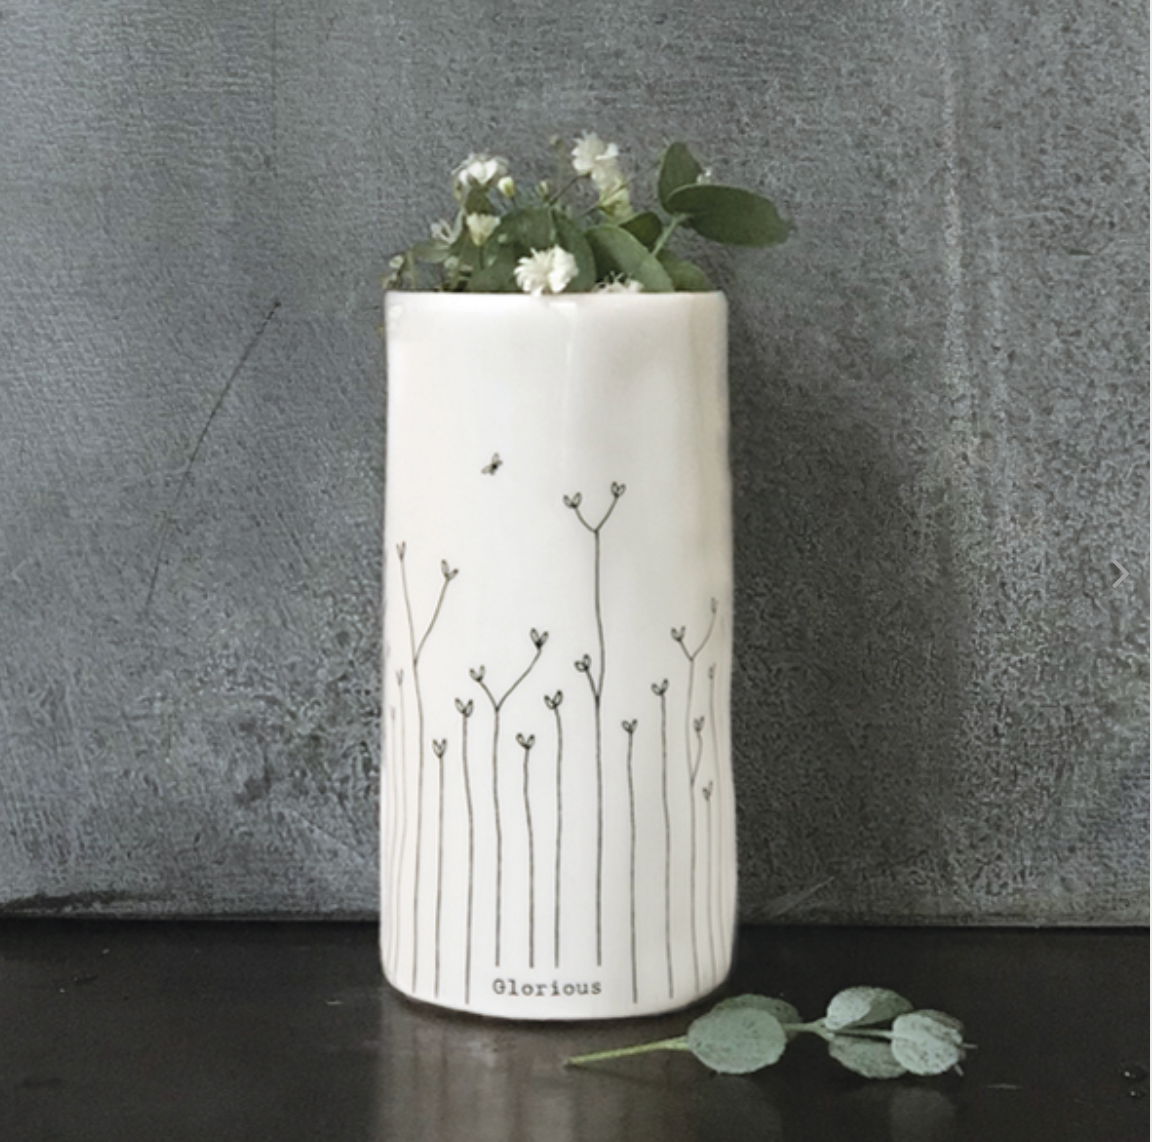 White Porcelain Glorious Bud Vase